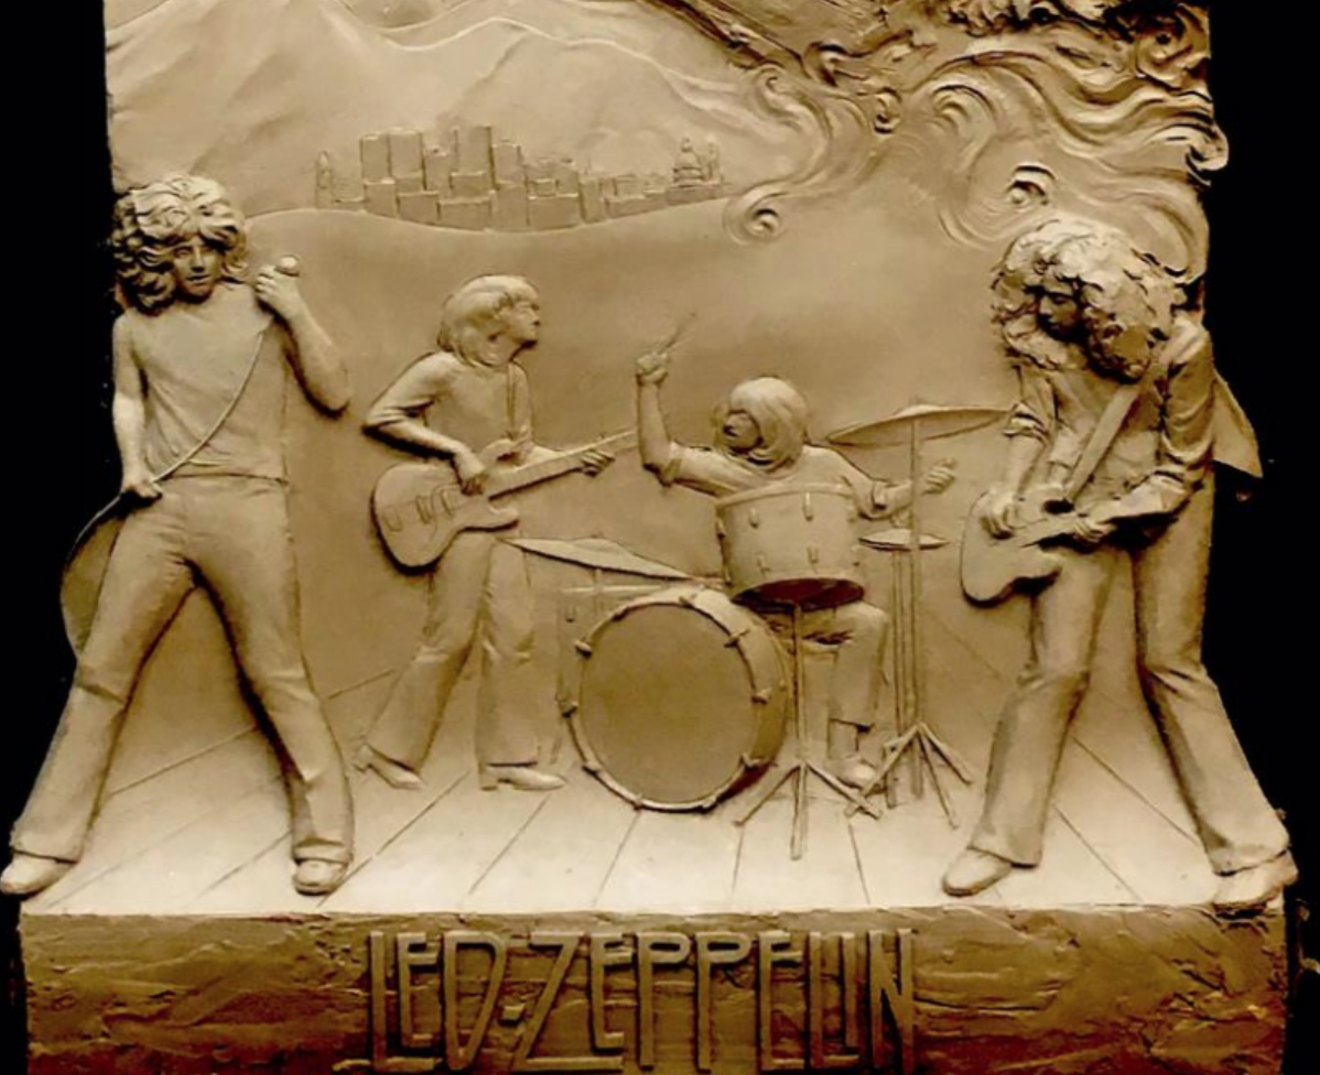 Loveland sculptor Joey Bainer is creating a plaque celebrating Led Zeppelin Day in Denver.